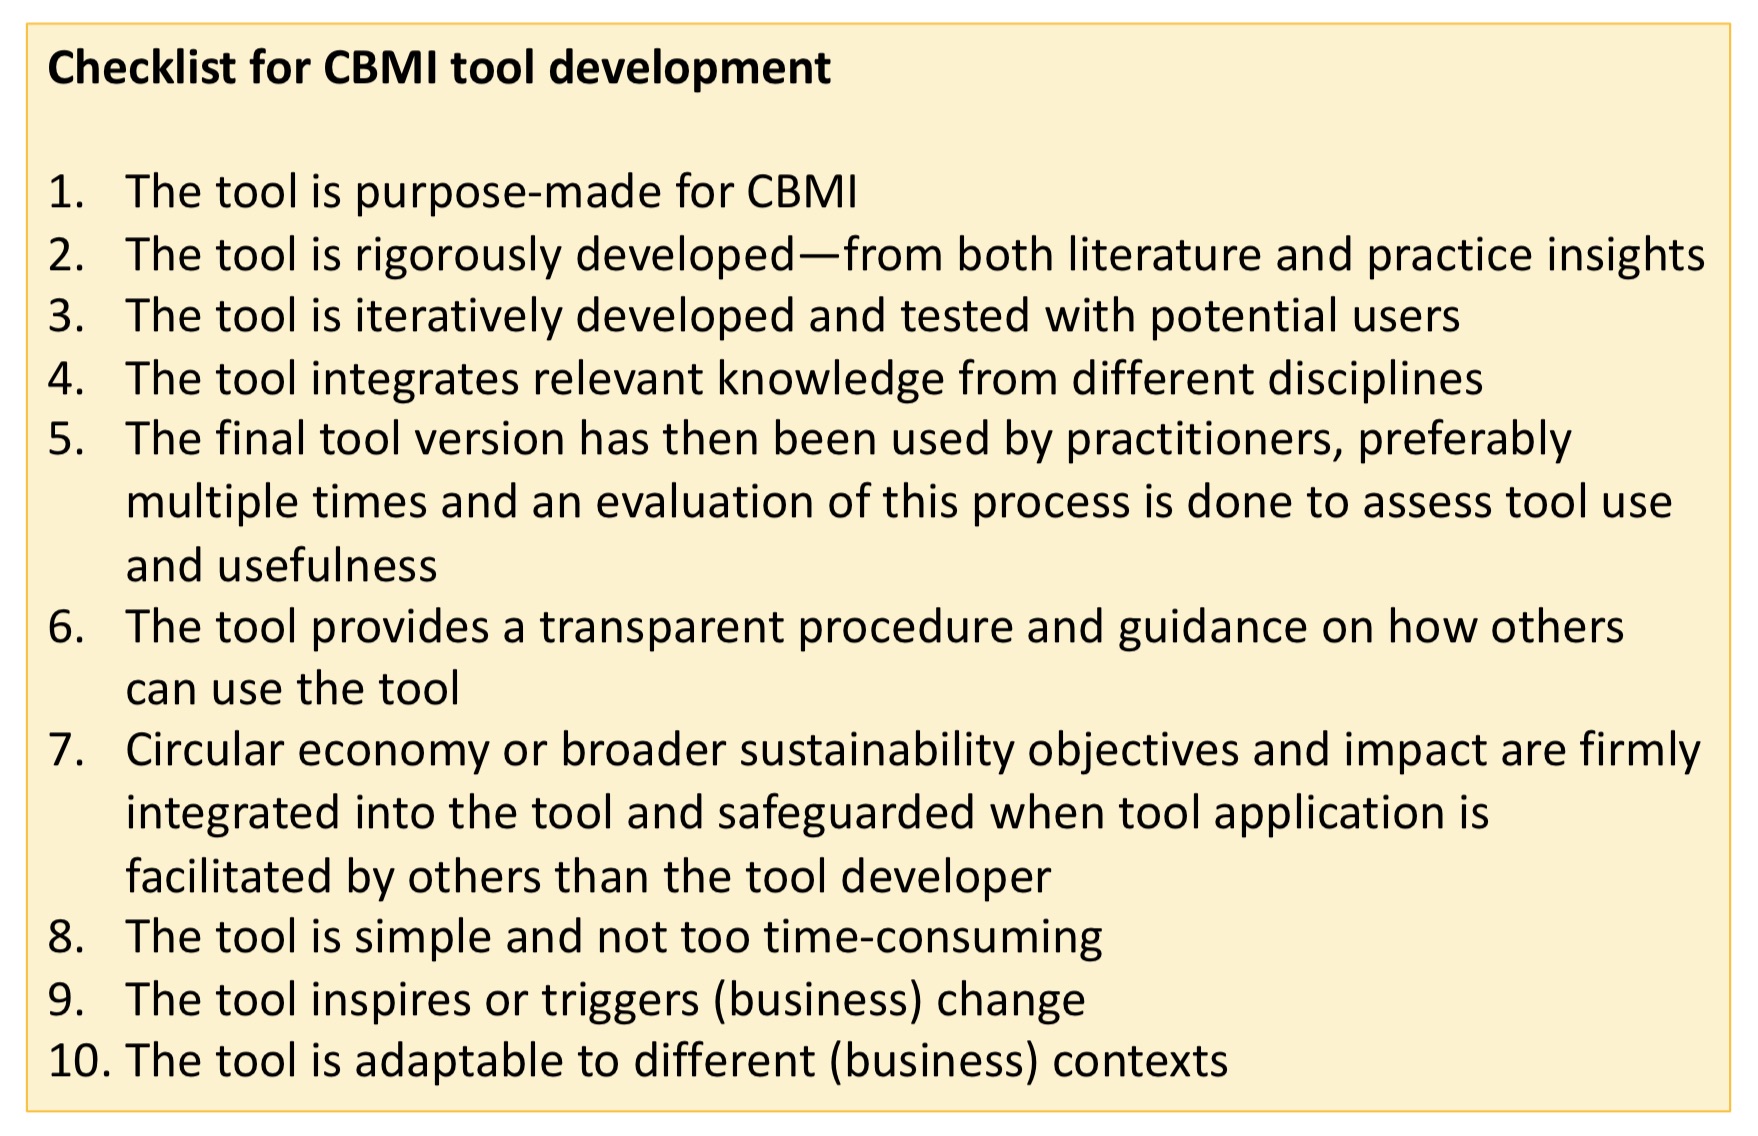 Checklist for tool CBMI development